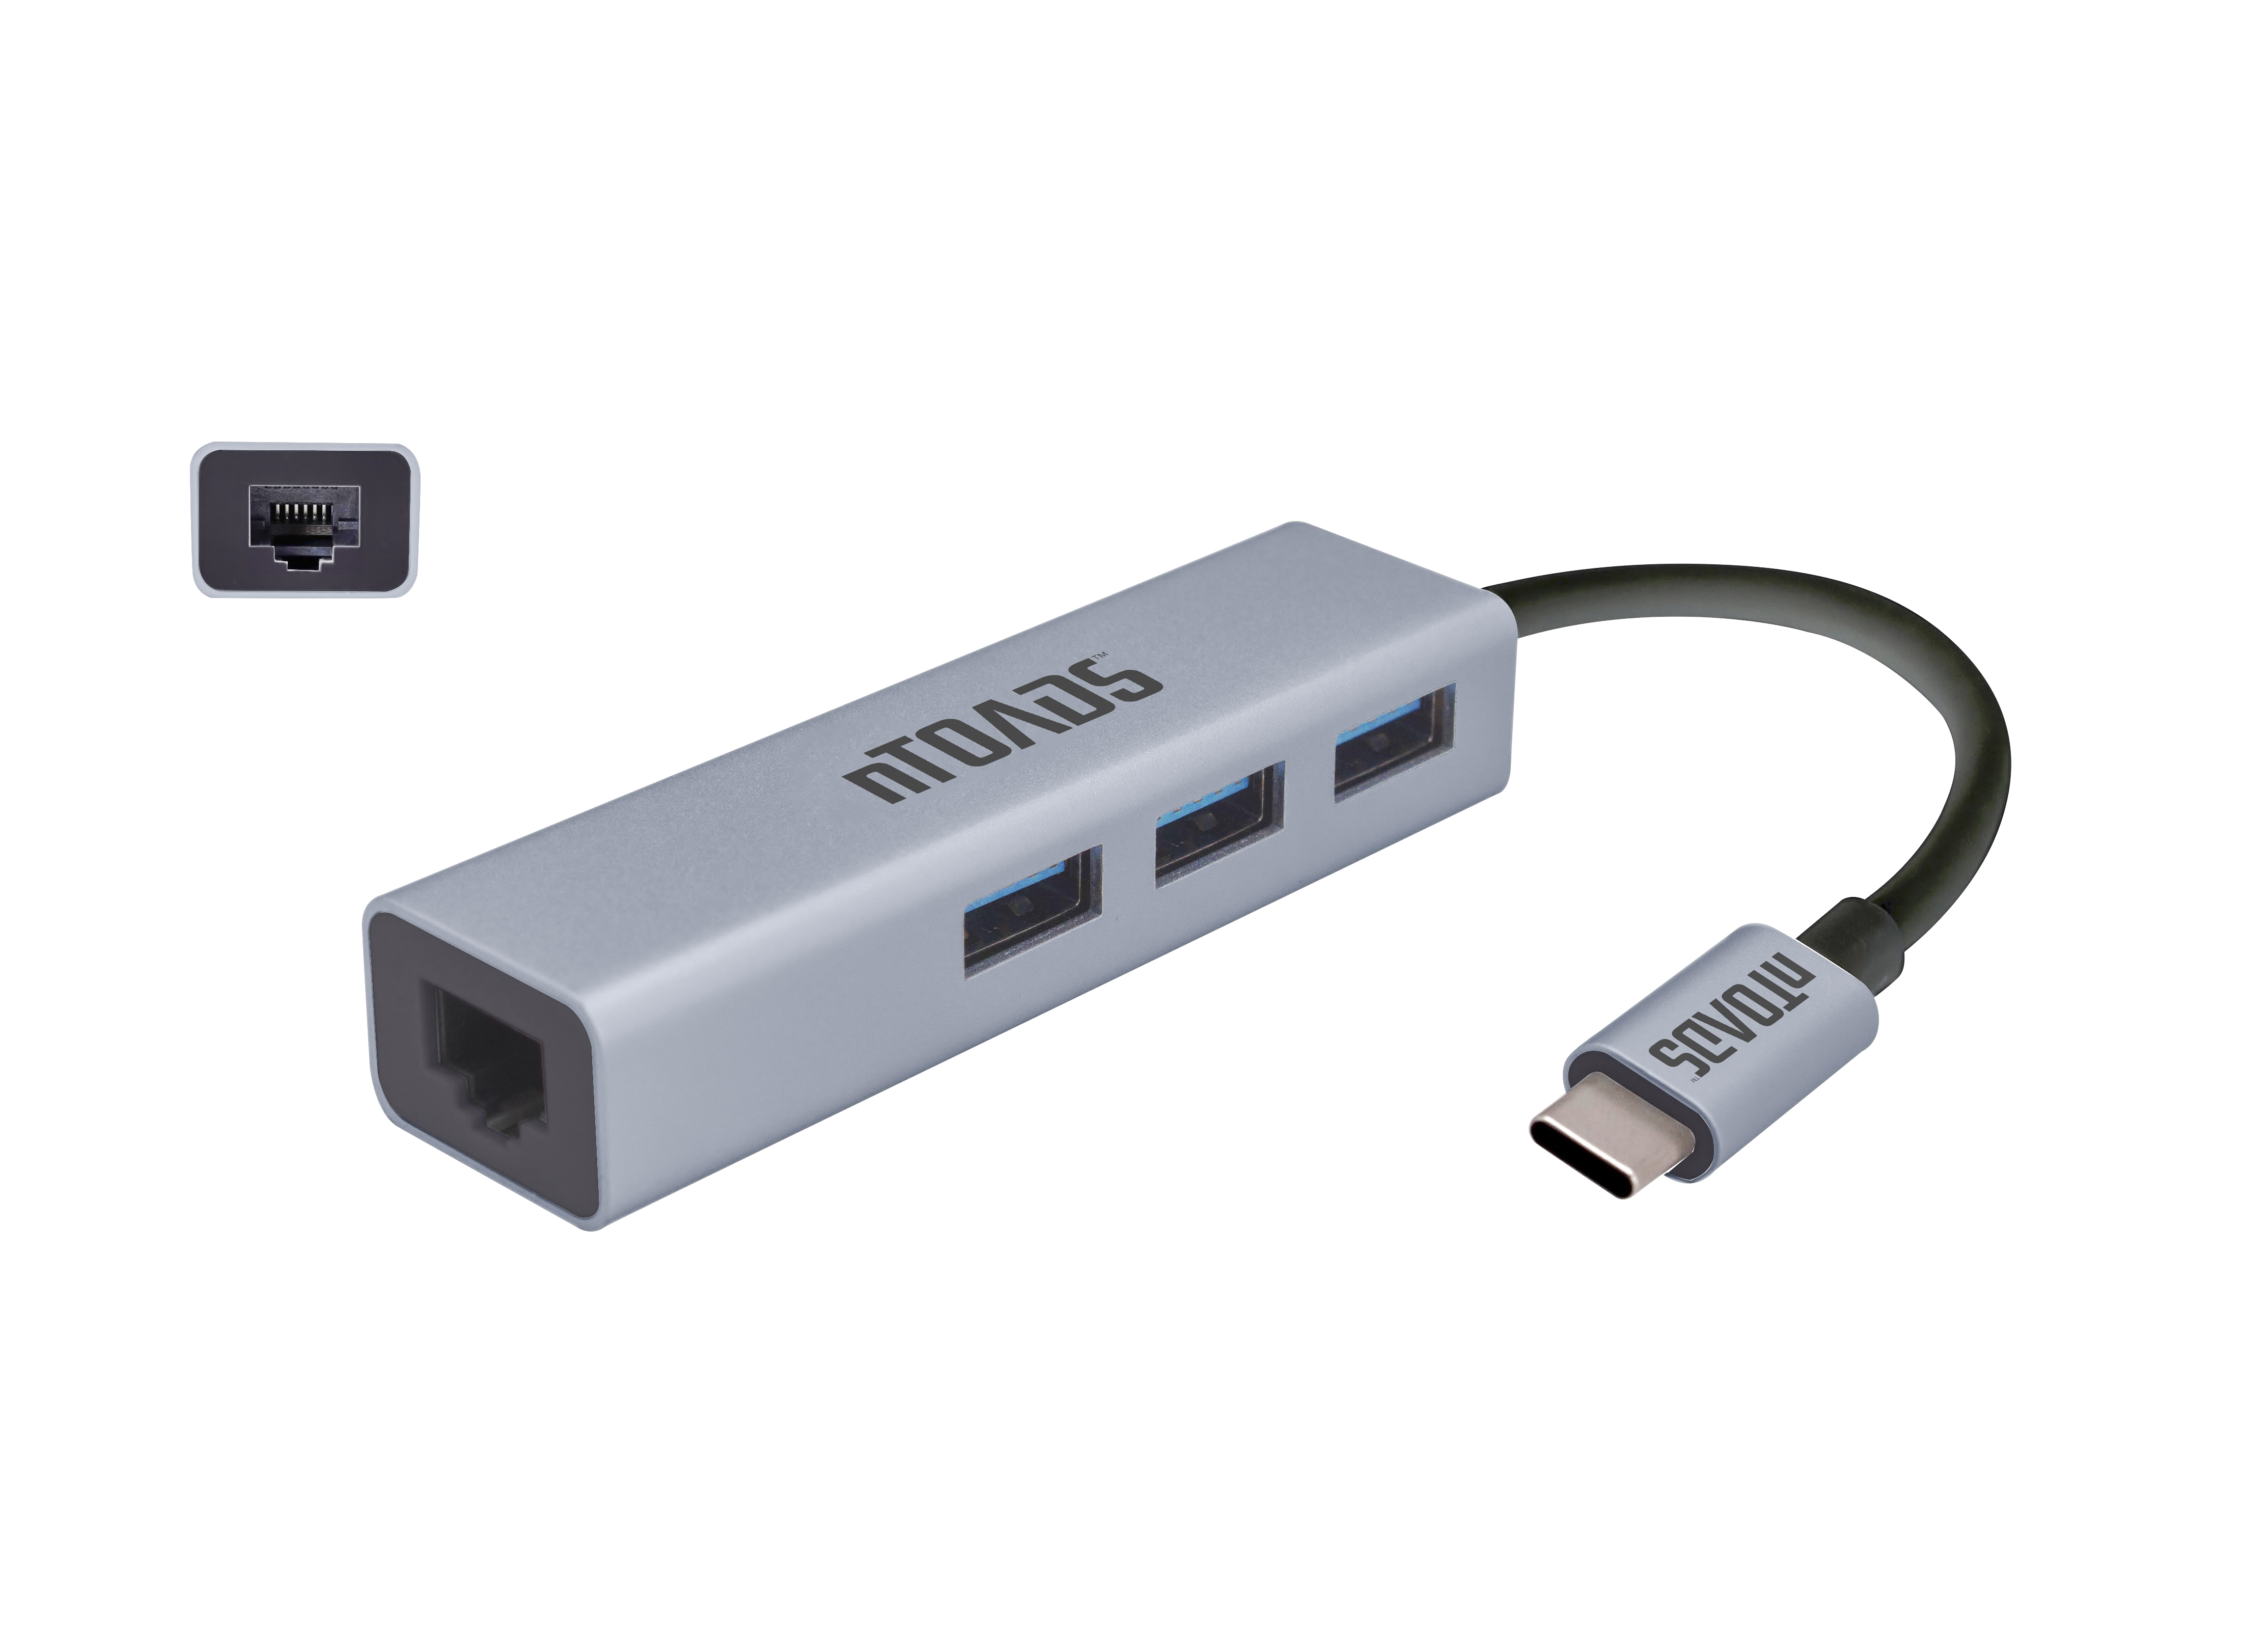 nTOADS USB 3.1 Type C HUB with USB 3.0 X 3 Ports and 1 Gigabit Ethernet Port